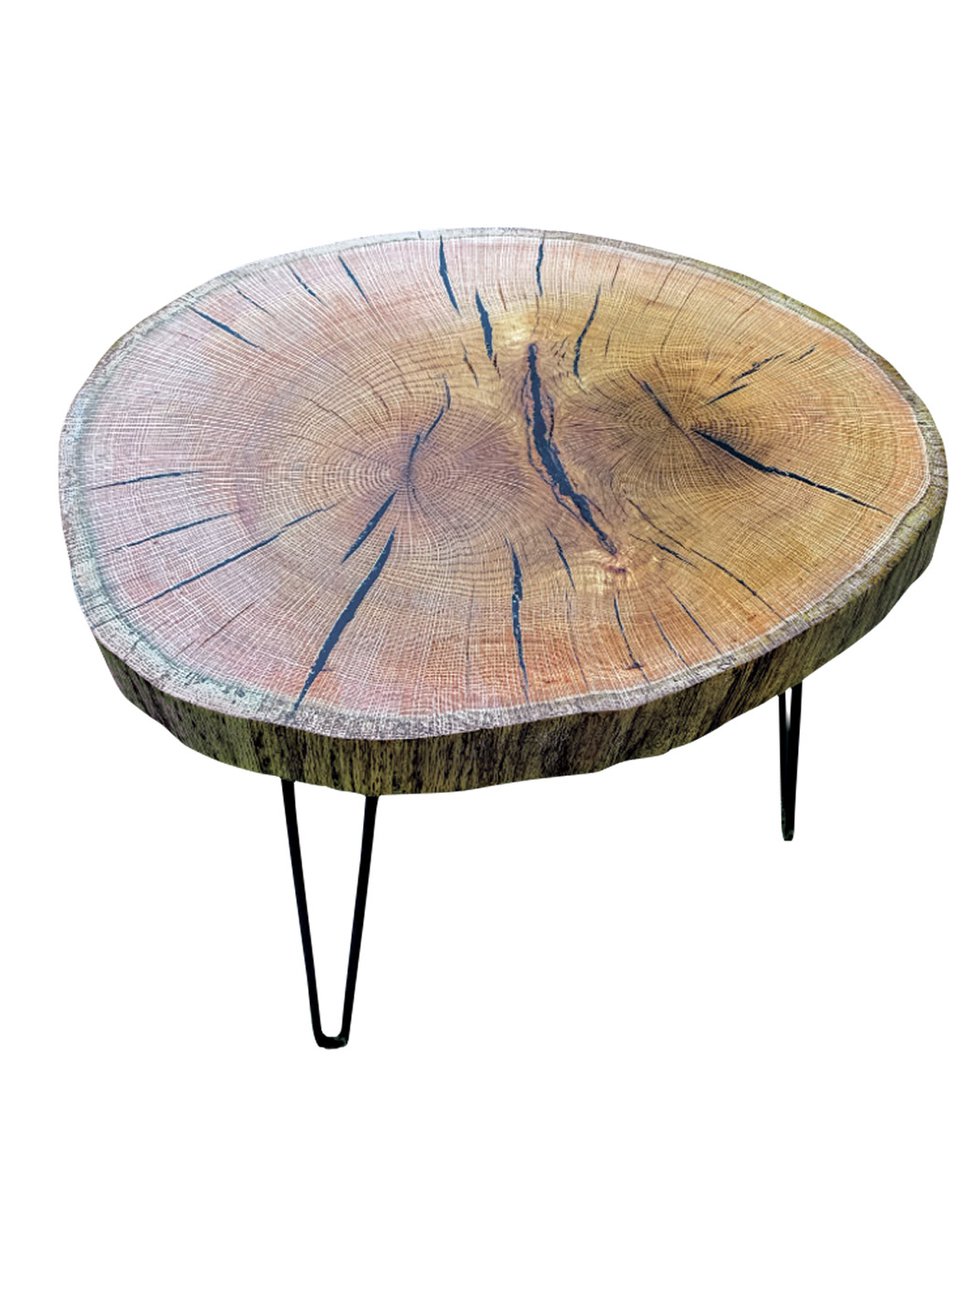 red oak table boomerrang designs.jpg